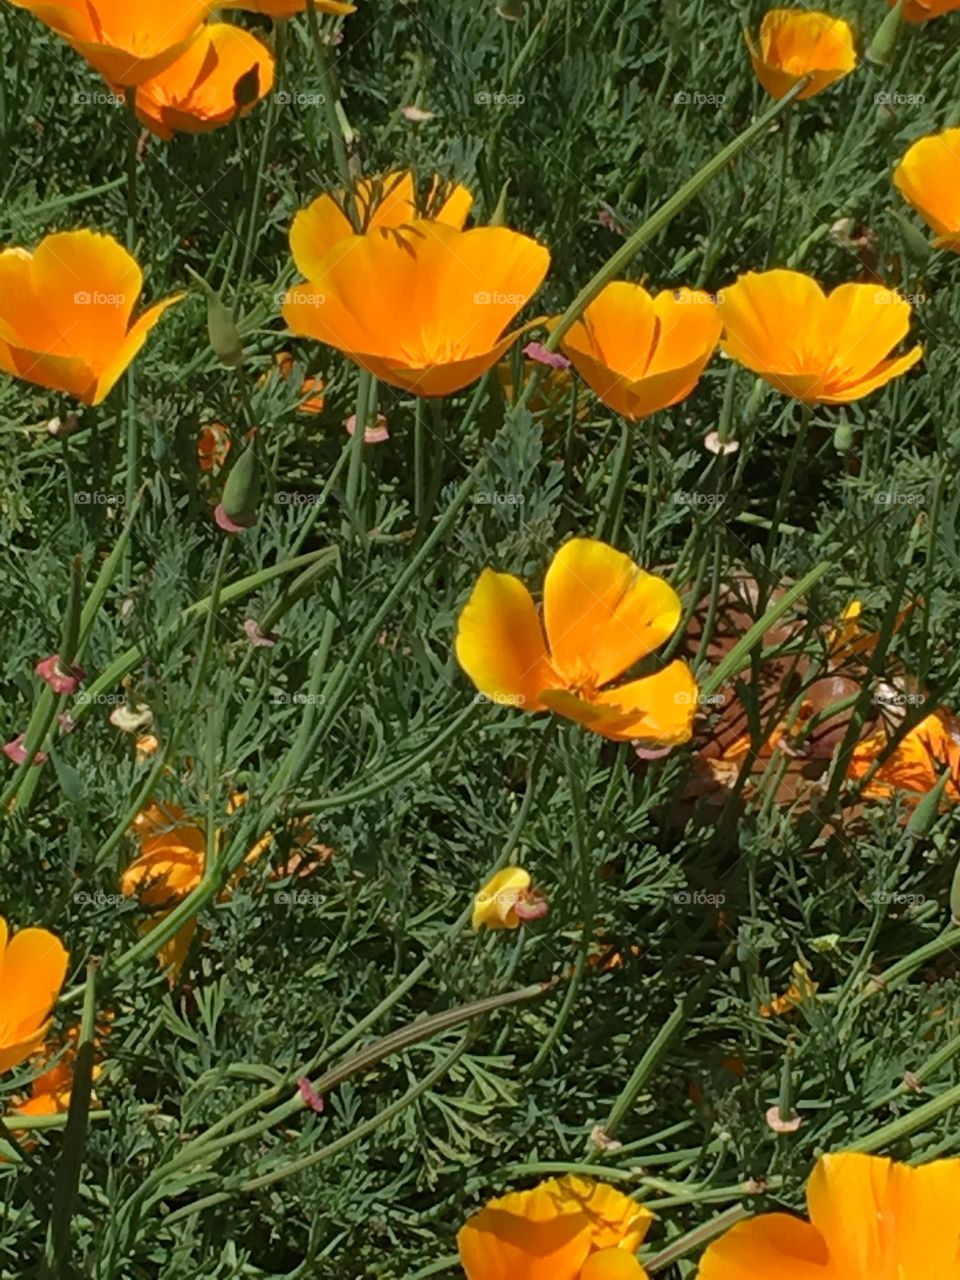 California poppys